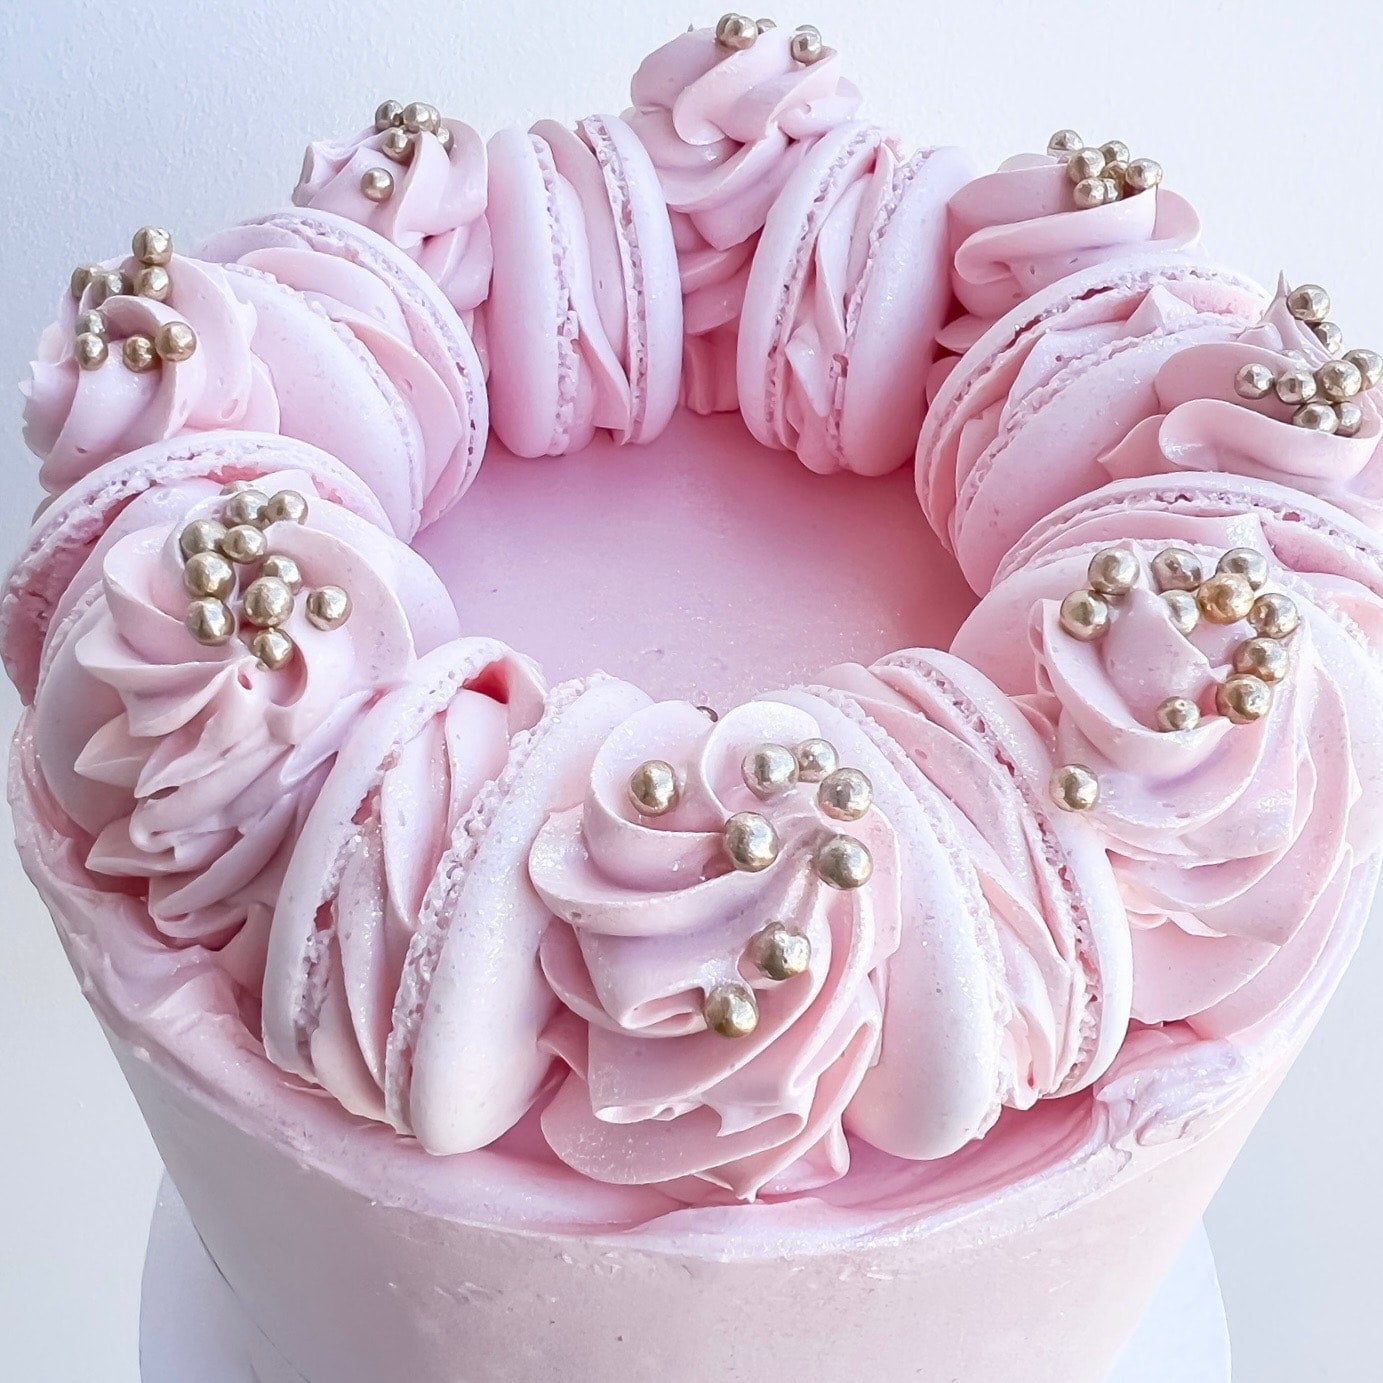 Macaron Birthday Cake | Online Delivery in Singapore - Honeypeachsg Bakery